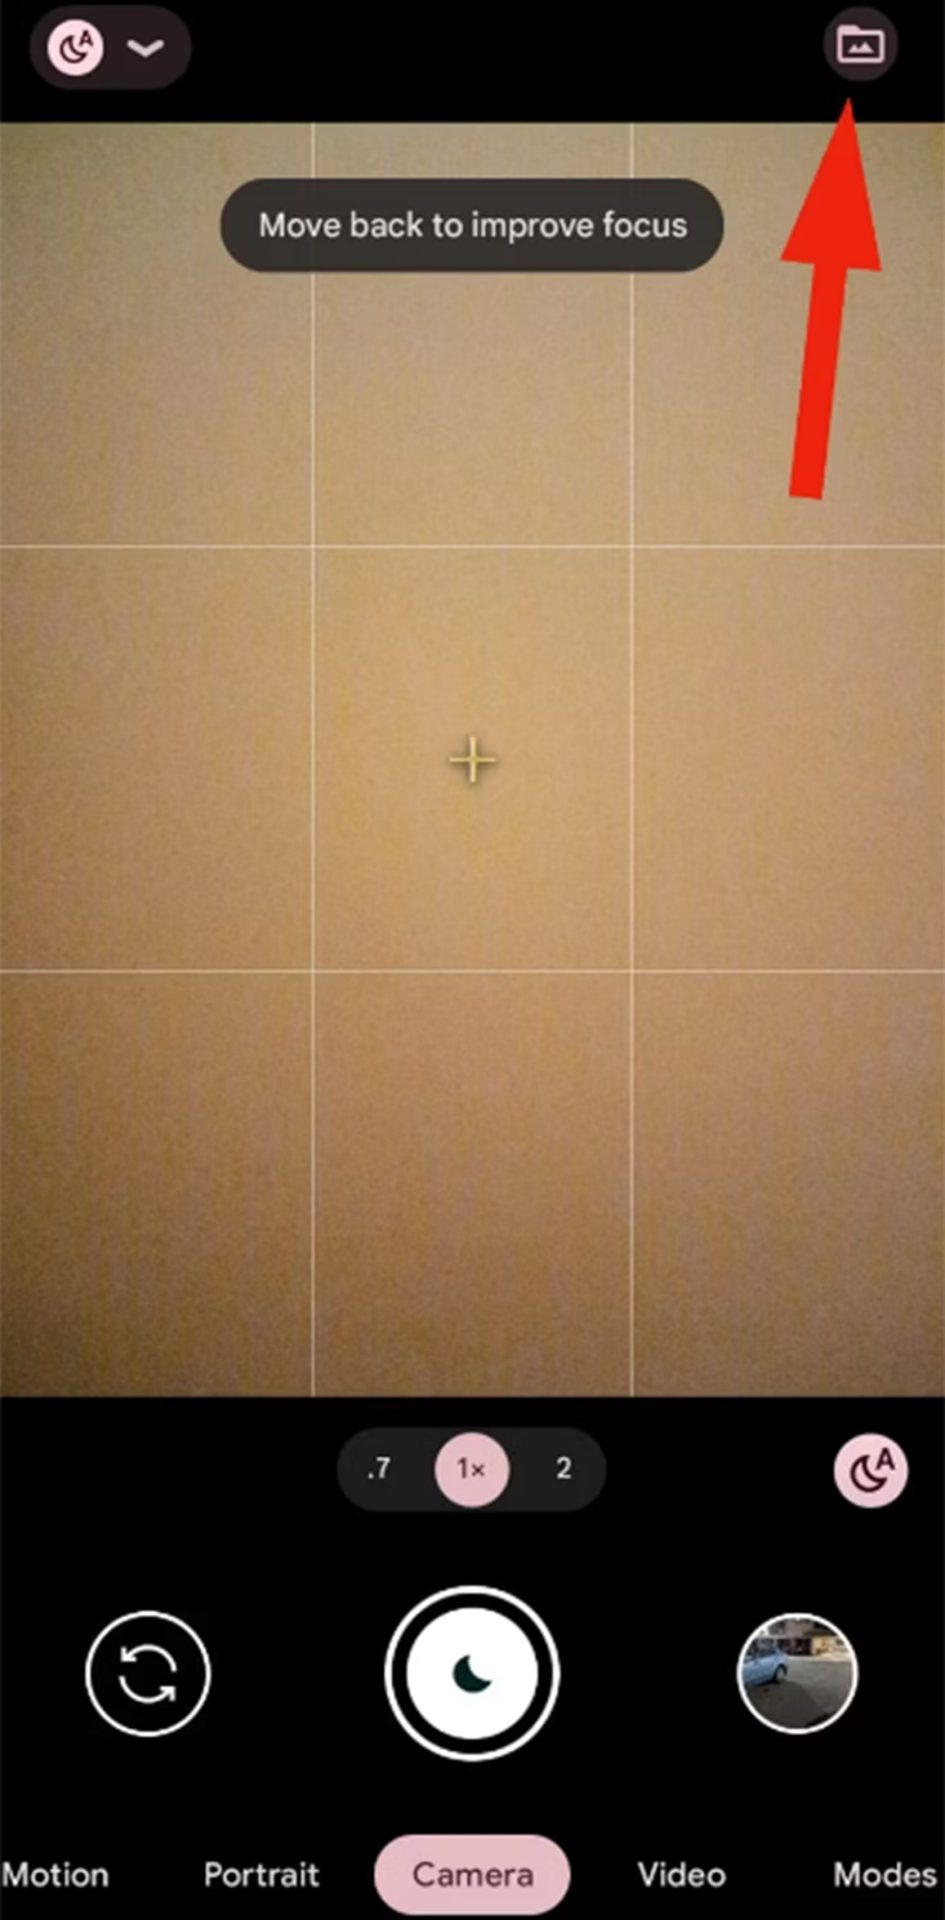 A screenshot of the Pixel phone's camera space